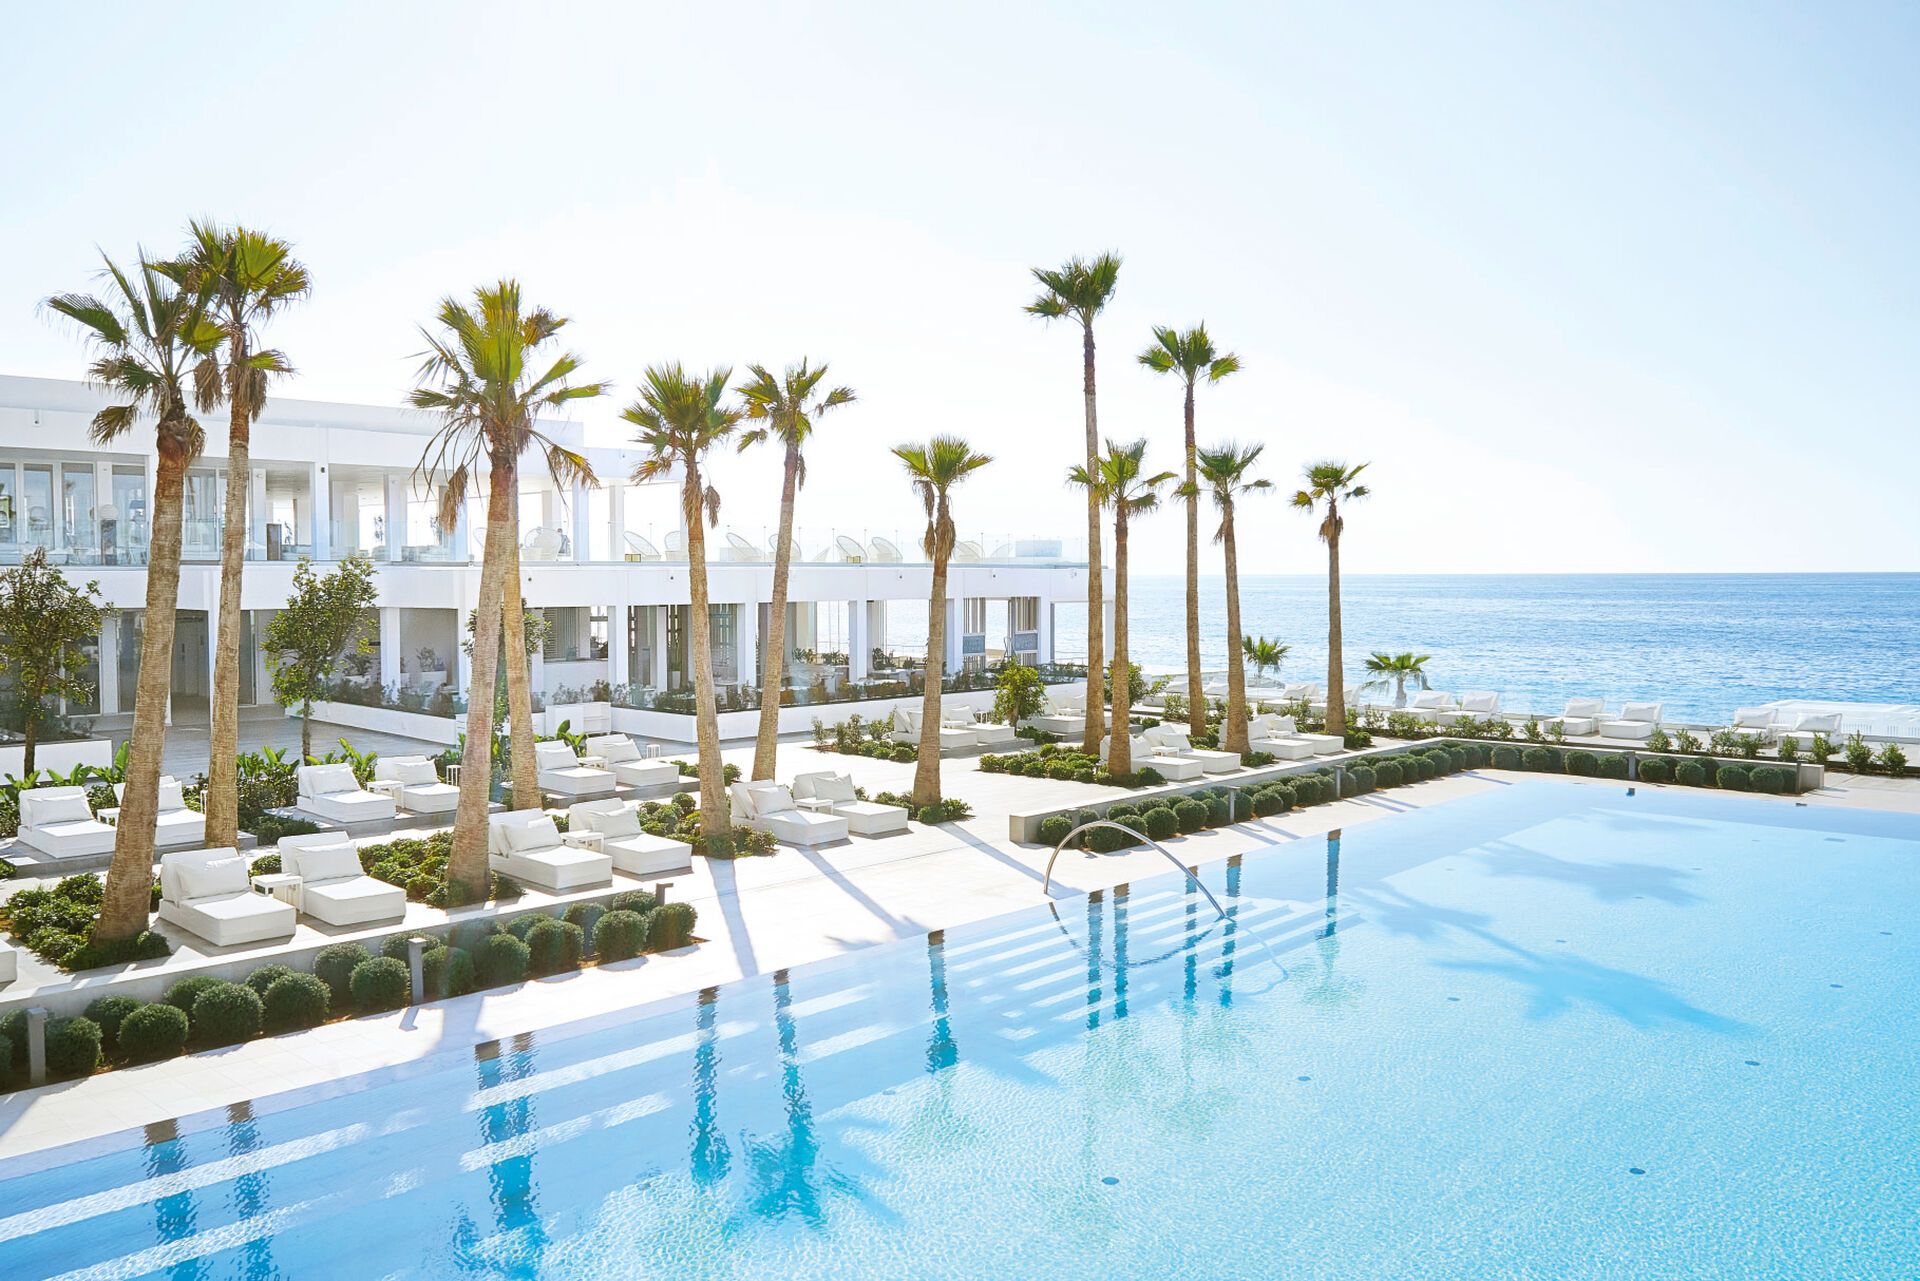 Crète - Rethymnon - Grèce - Iles grecques - Hotel Grecotel Lux Me White Palace 5*